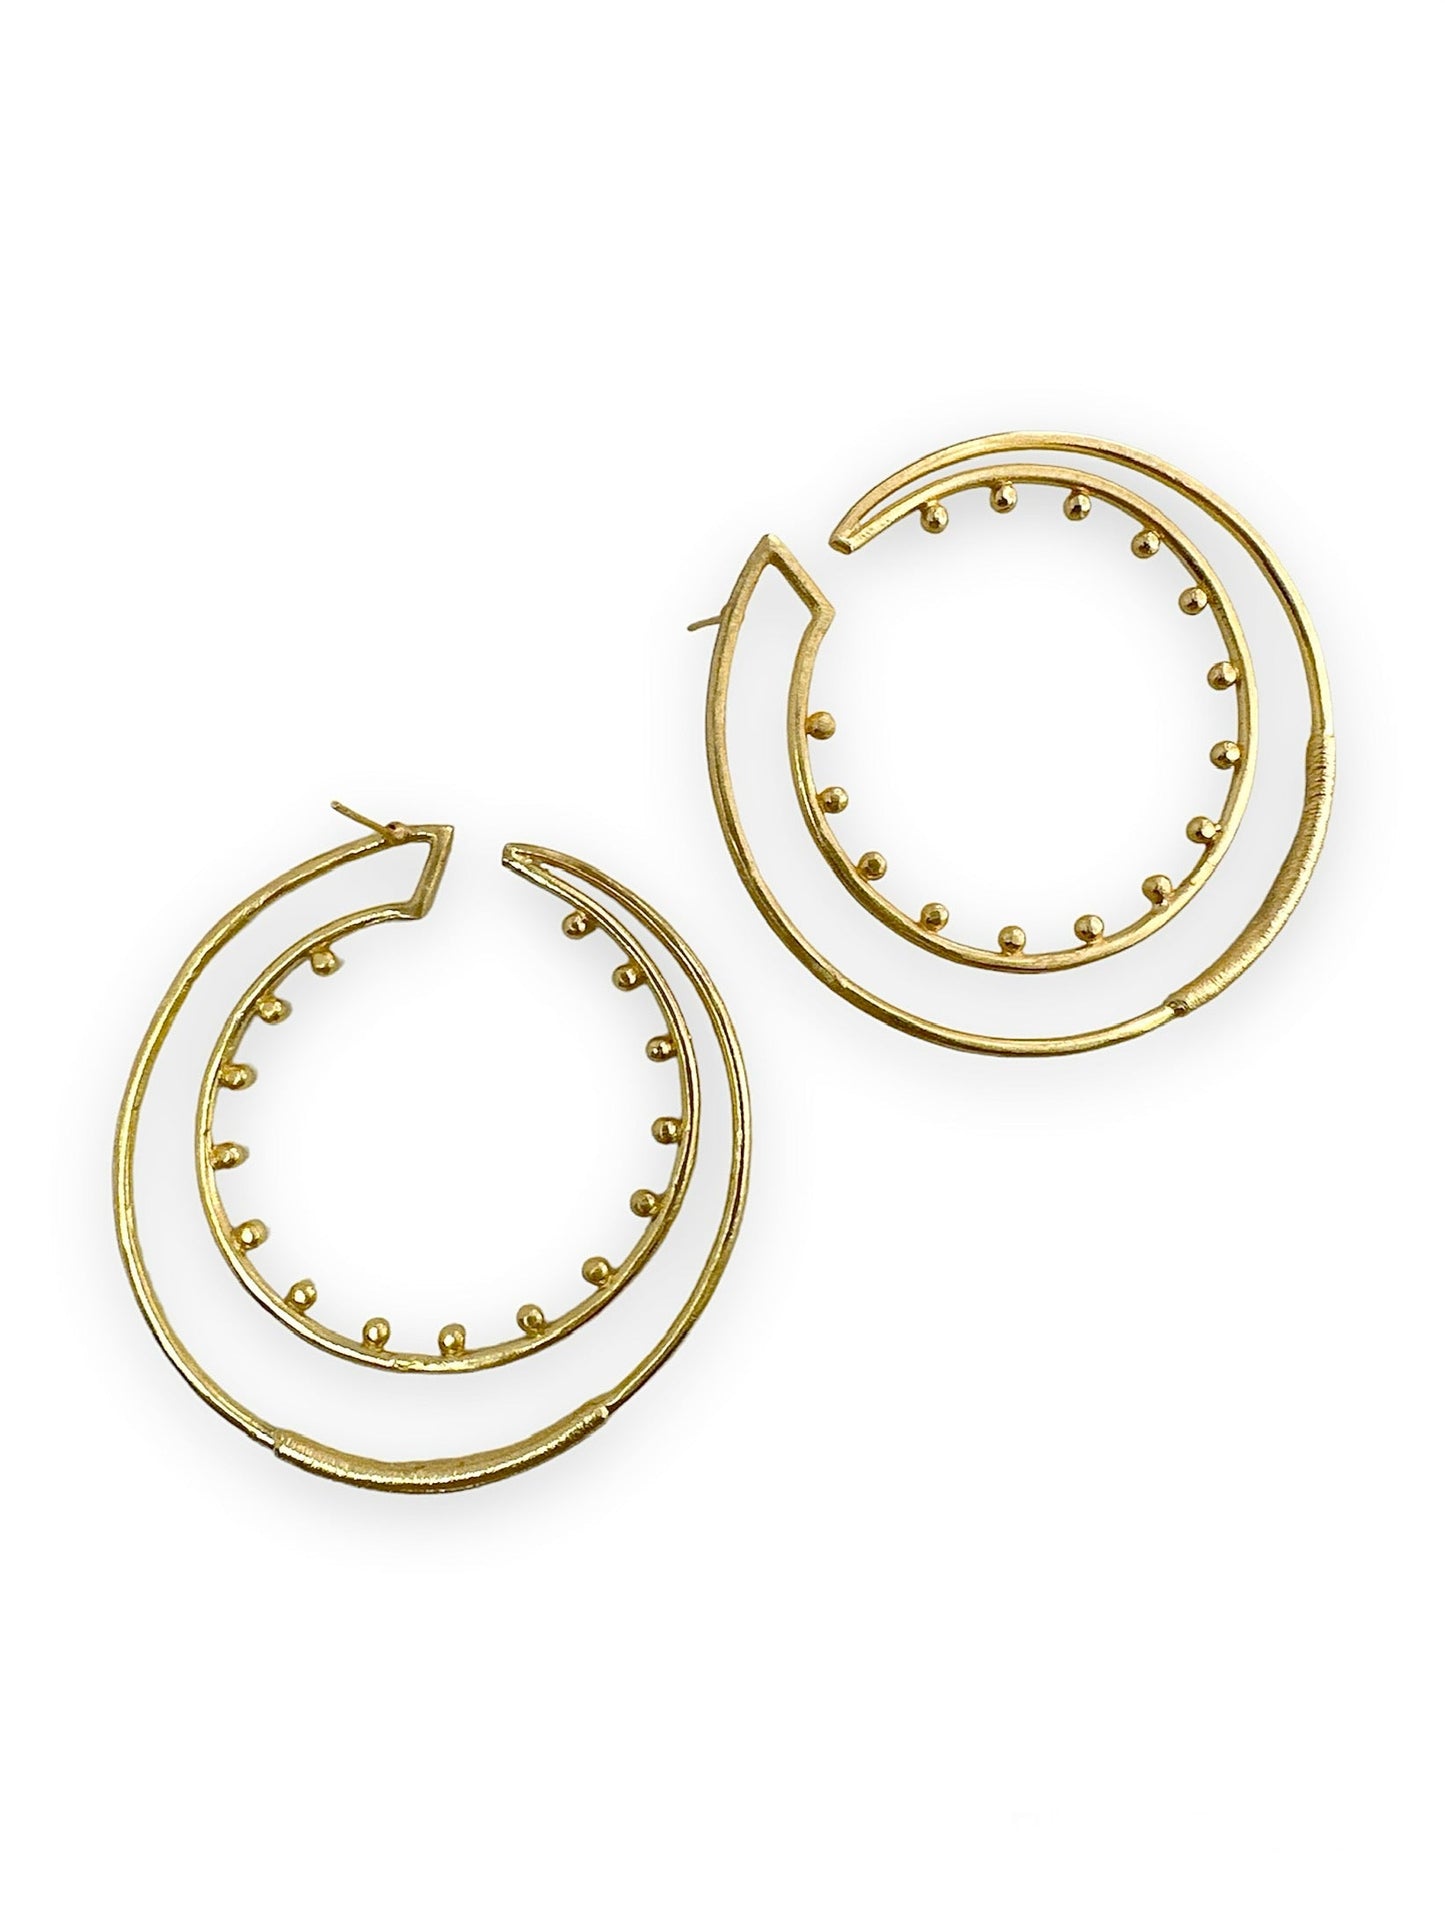 Unique Earrings for Women - Designs By Uchita